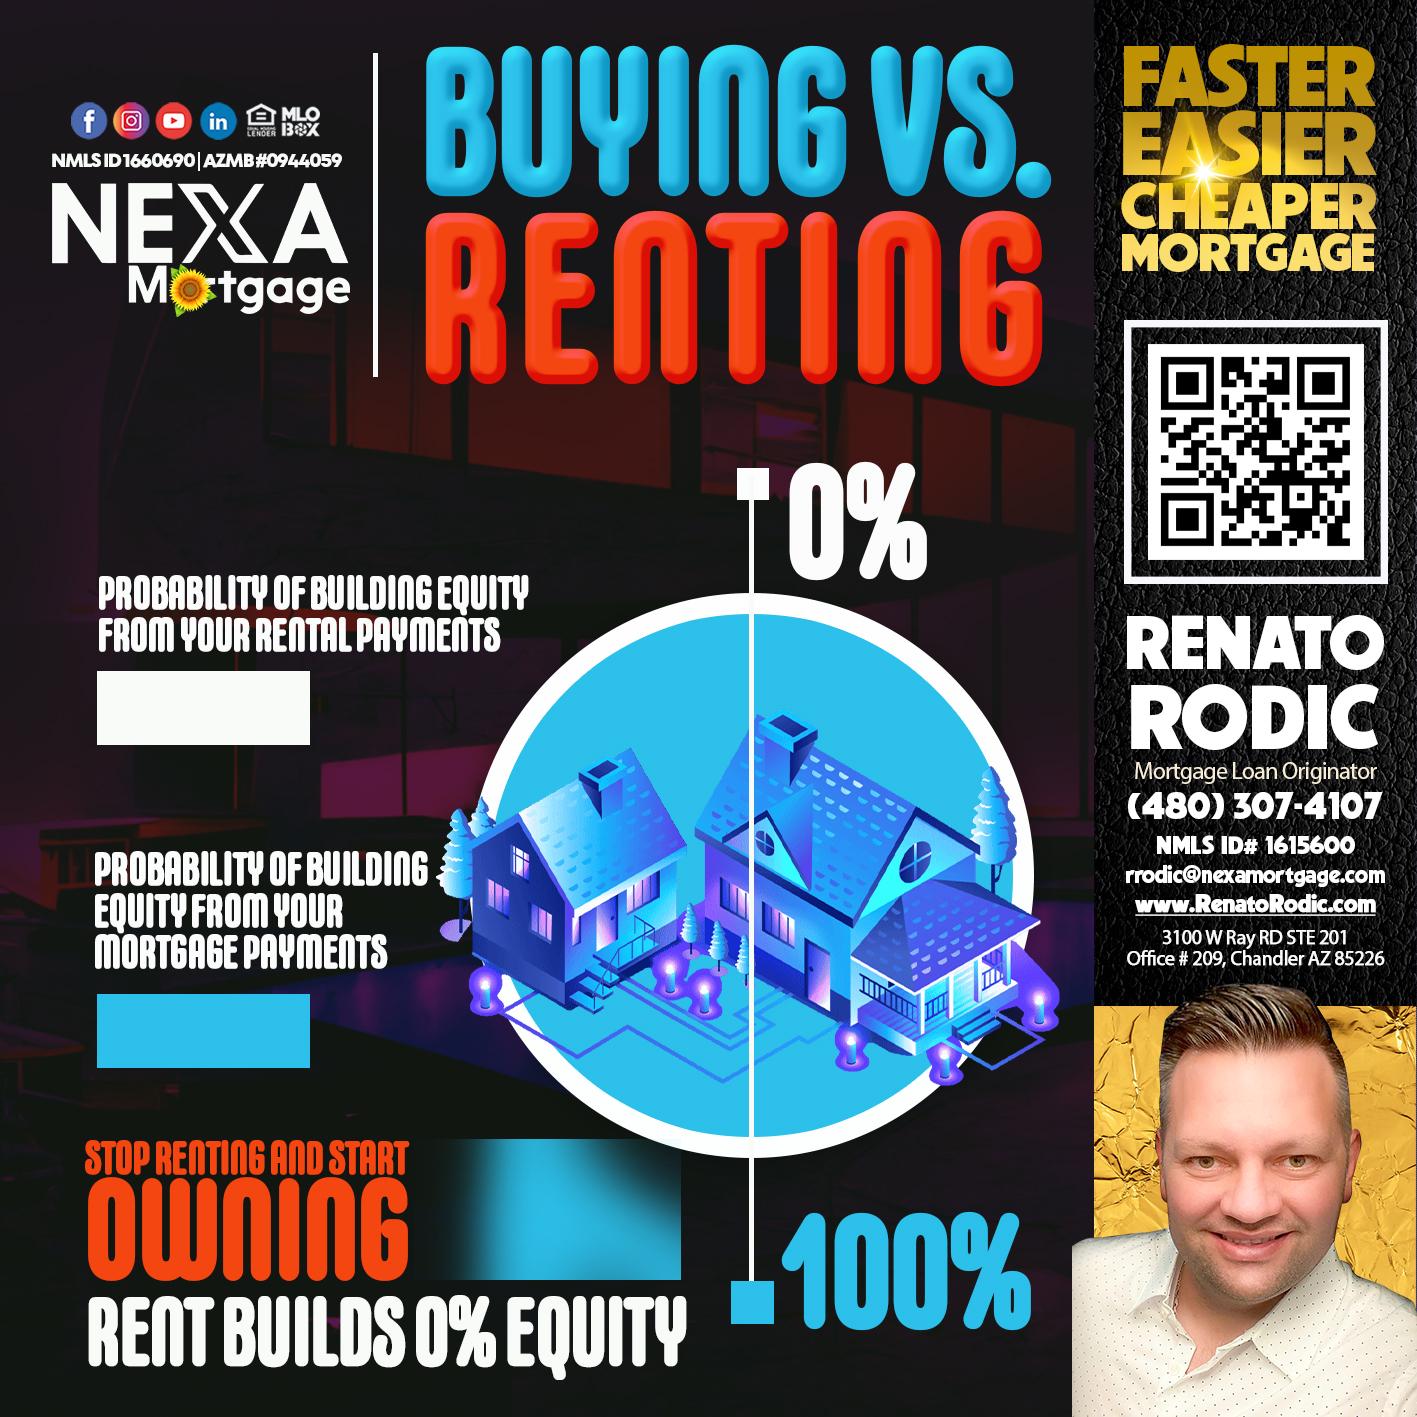 BUYING VS RENTING - Renato Rodic -Mortgage Loan Originator